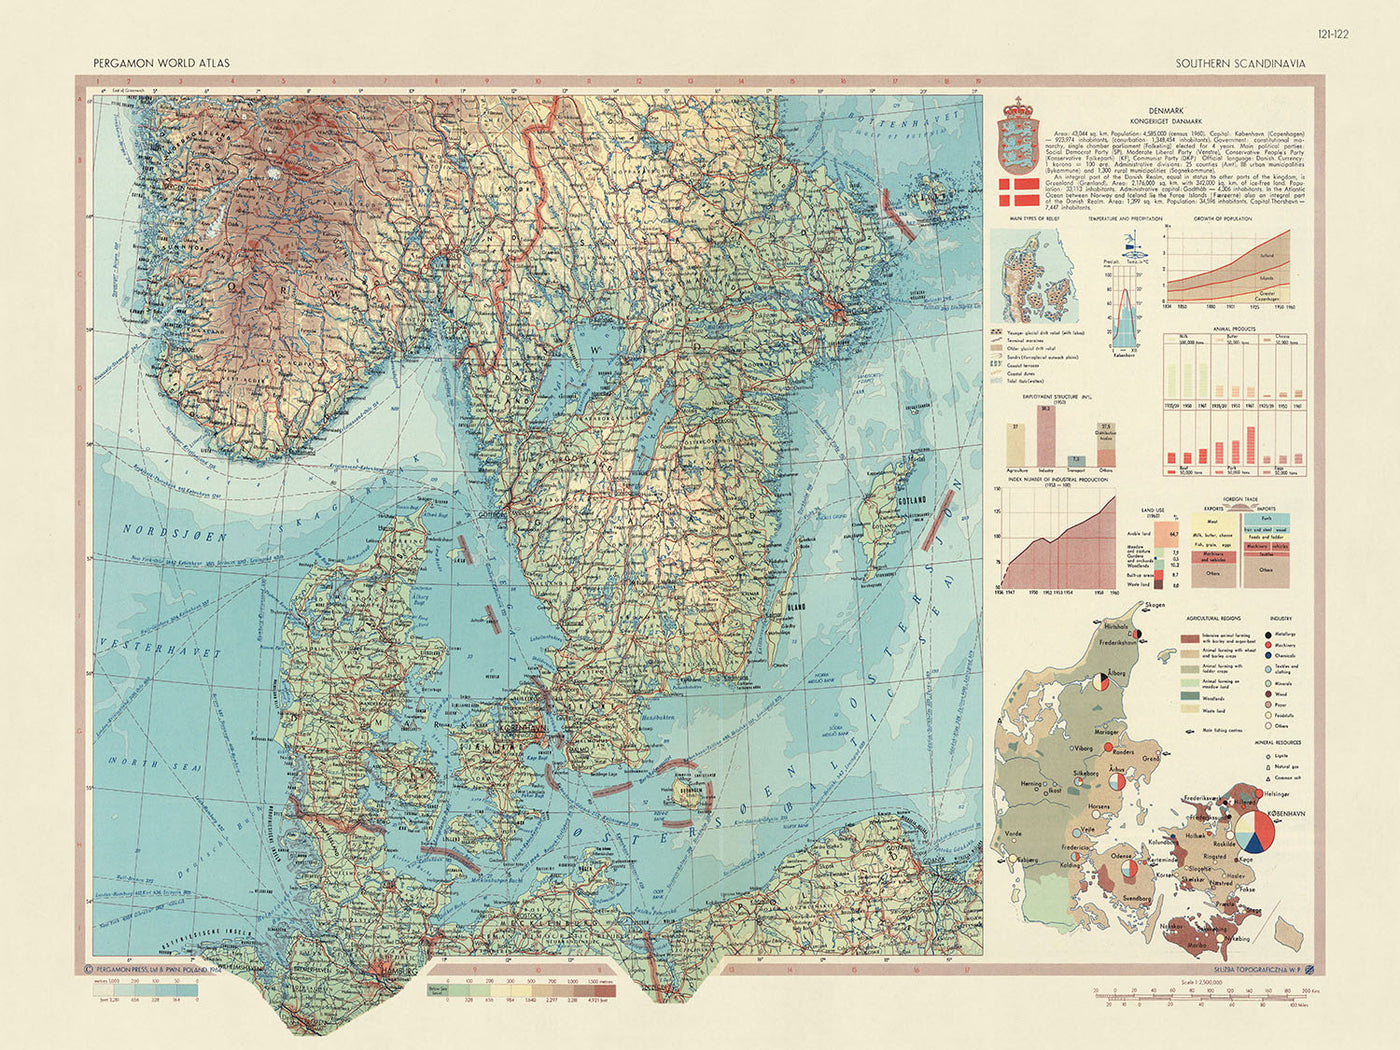 Alte Karte von Dänemark, 1967: Kopenhagen, Aarhus, Odense, Aalborg, Esbjerg